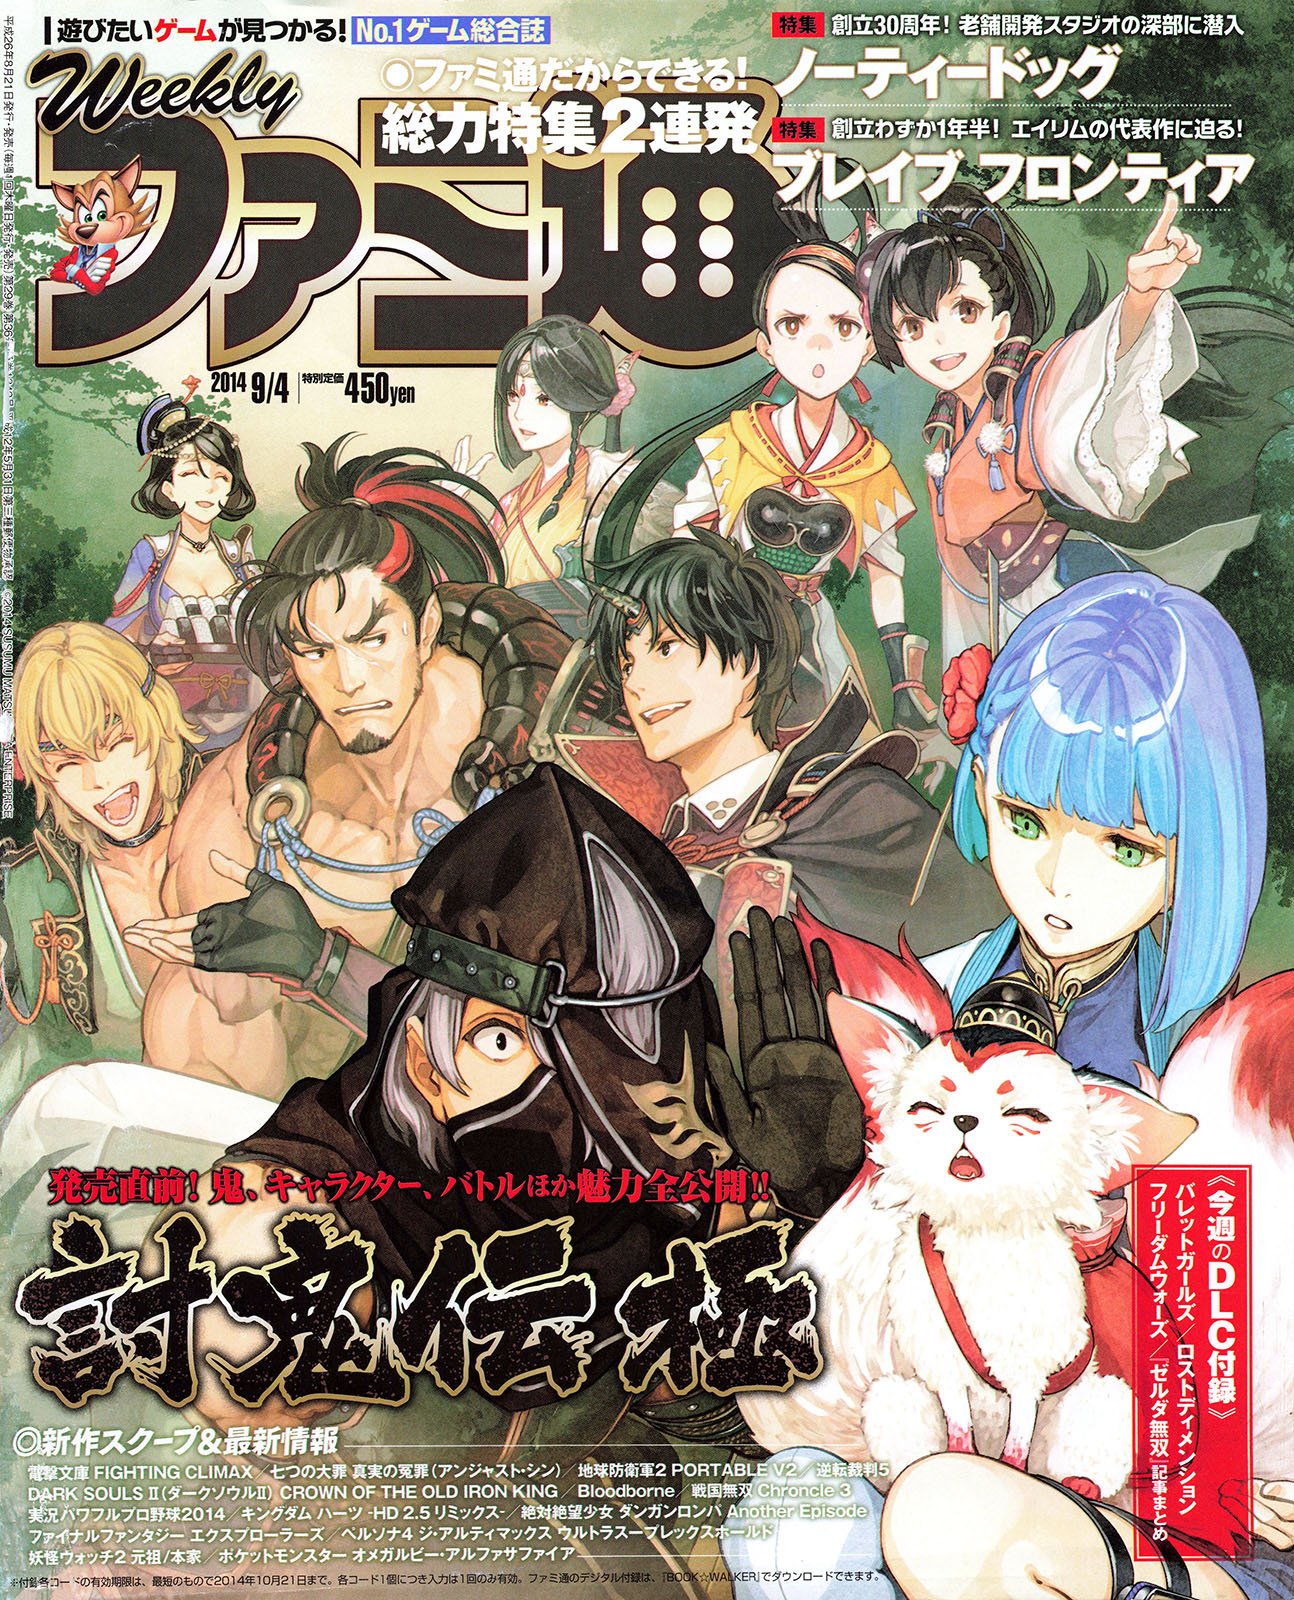 Famitsu Issue 1342 (September 4, 2014)